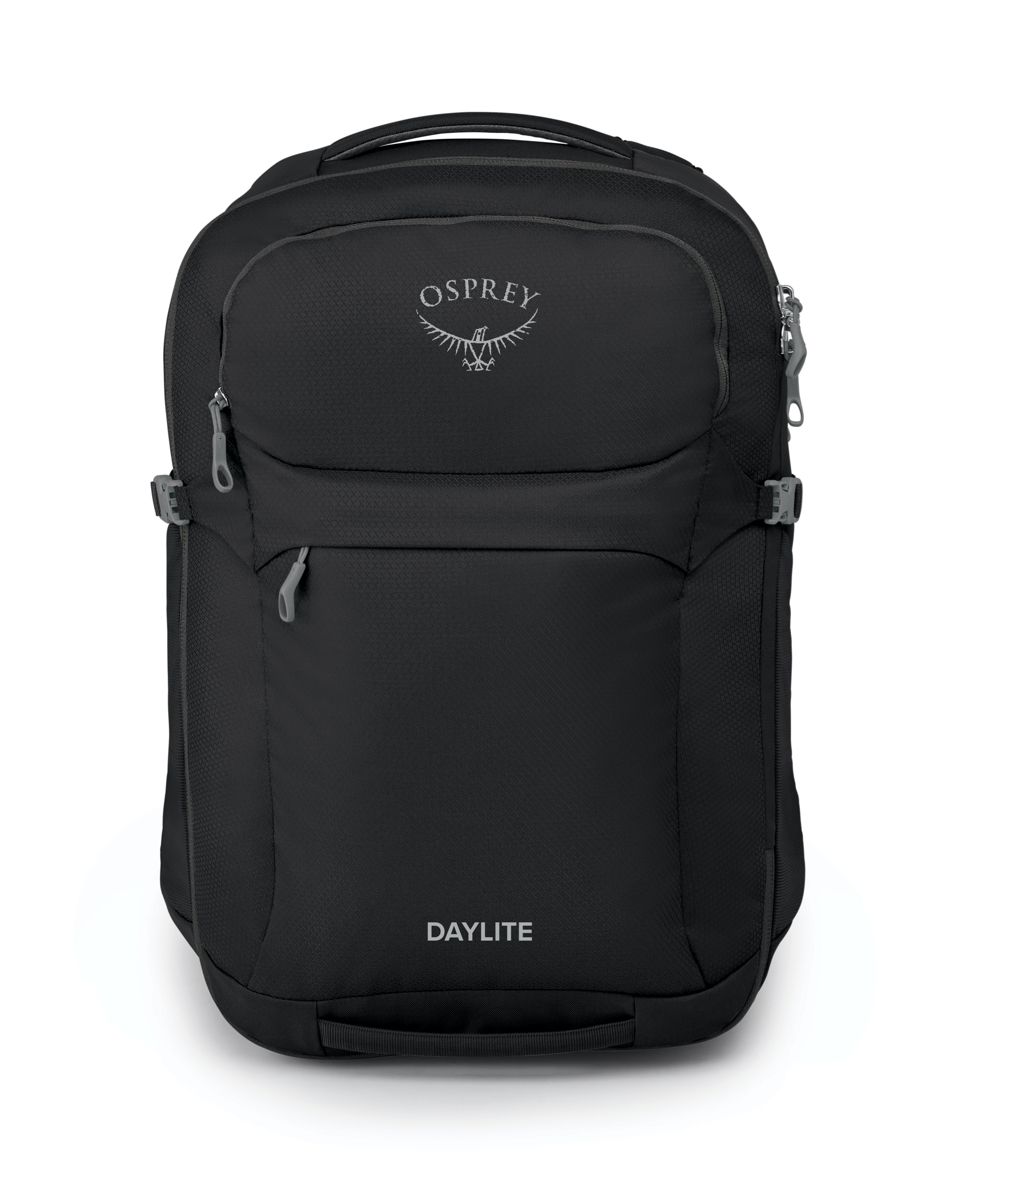 Osprey Daylite Carry-On Travel Pack 44 Black